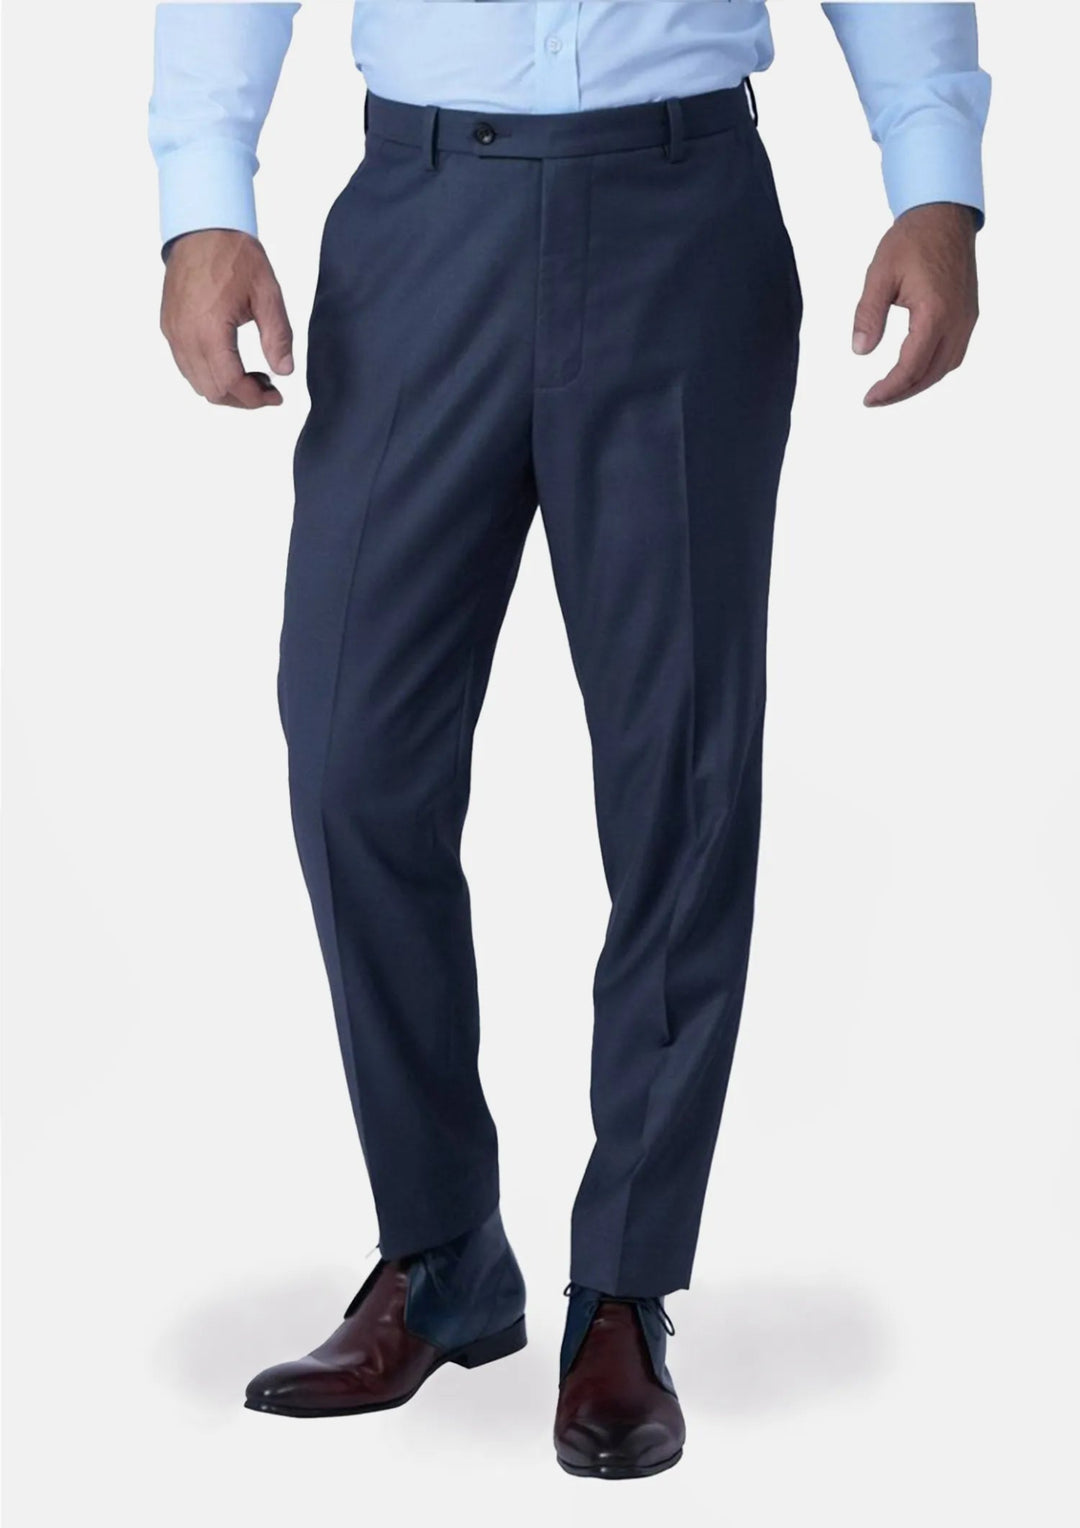 Steel Grey Twill Pants - SARTORO